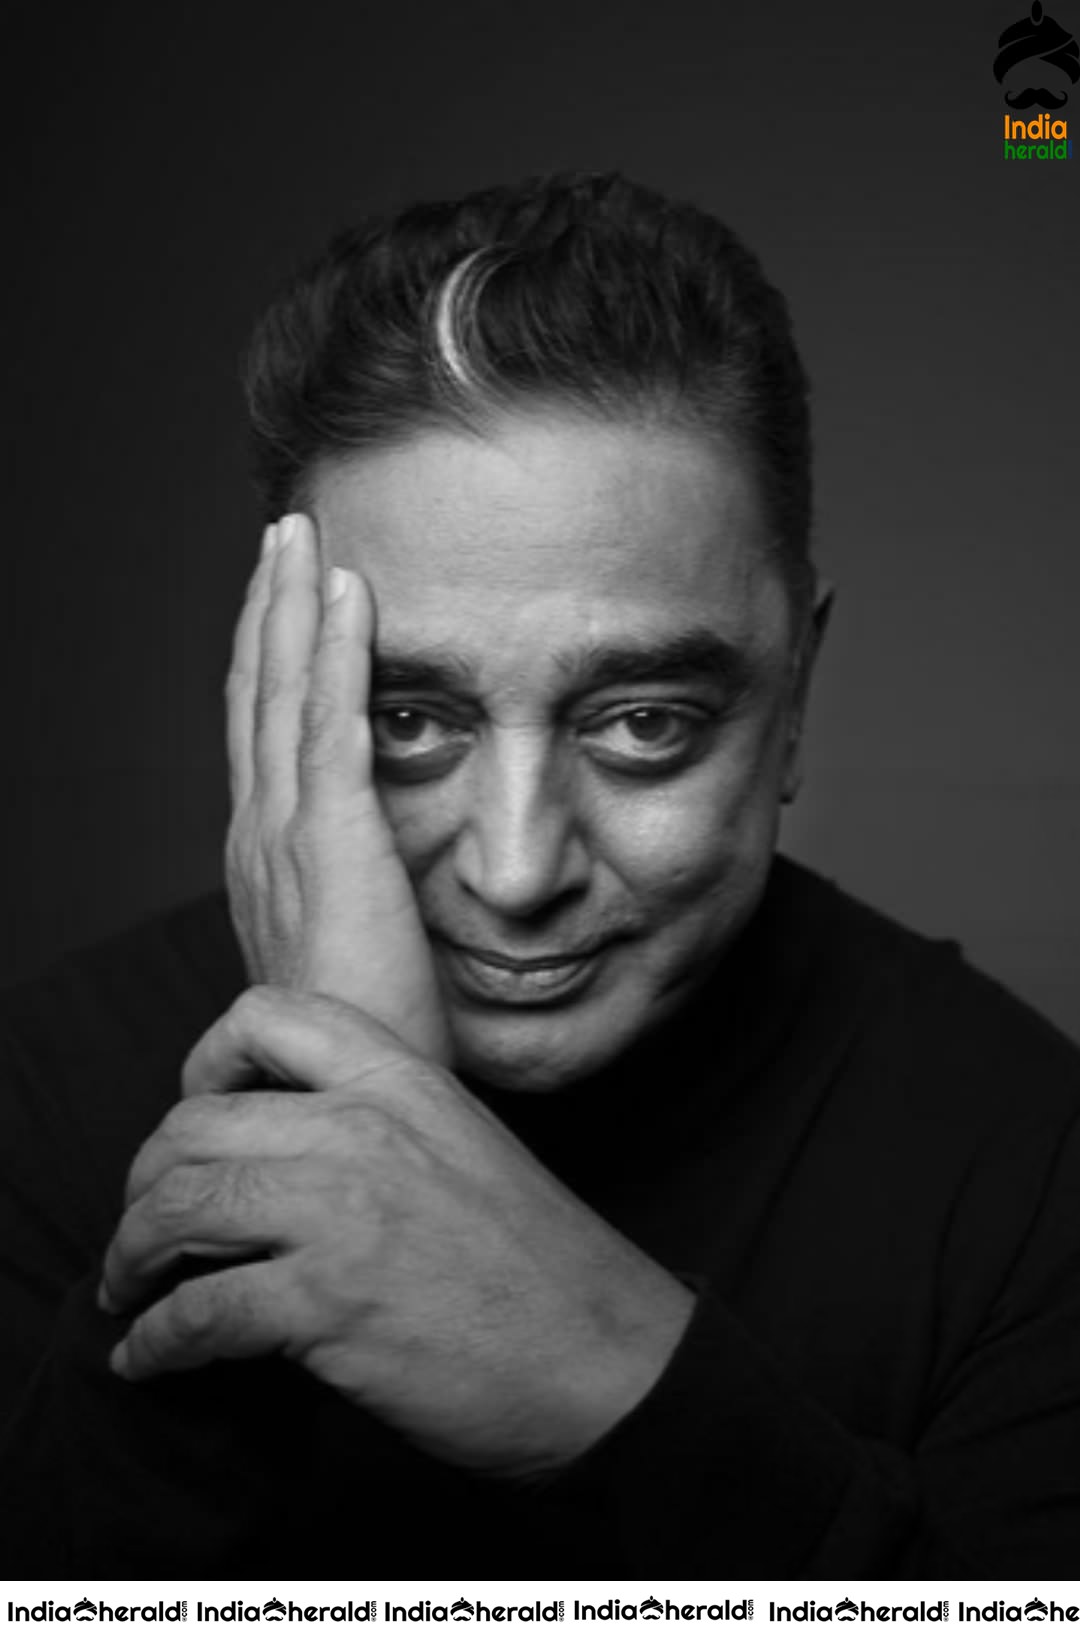 Ulaga Nayagan Kamal Haasan for Forbes India